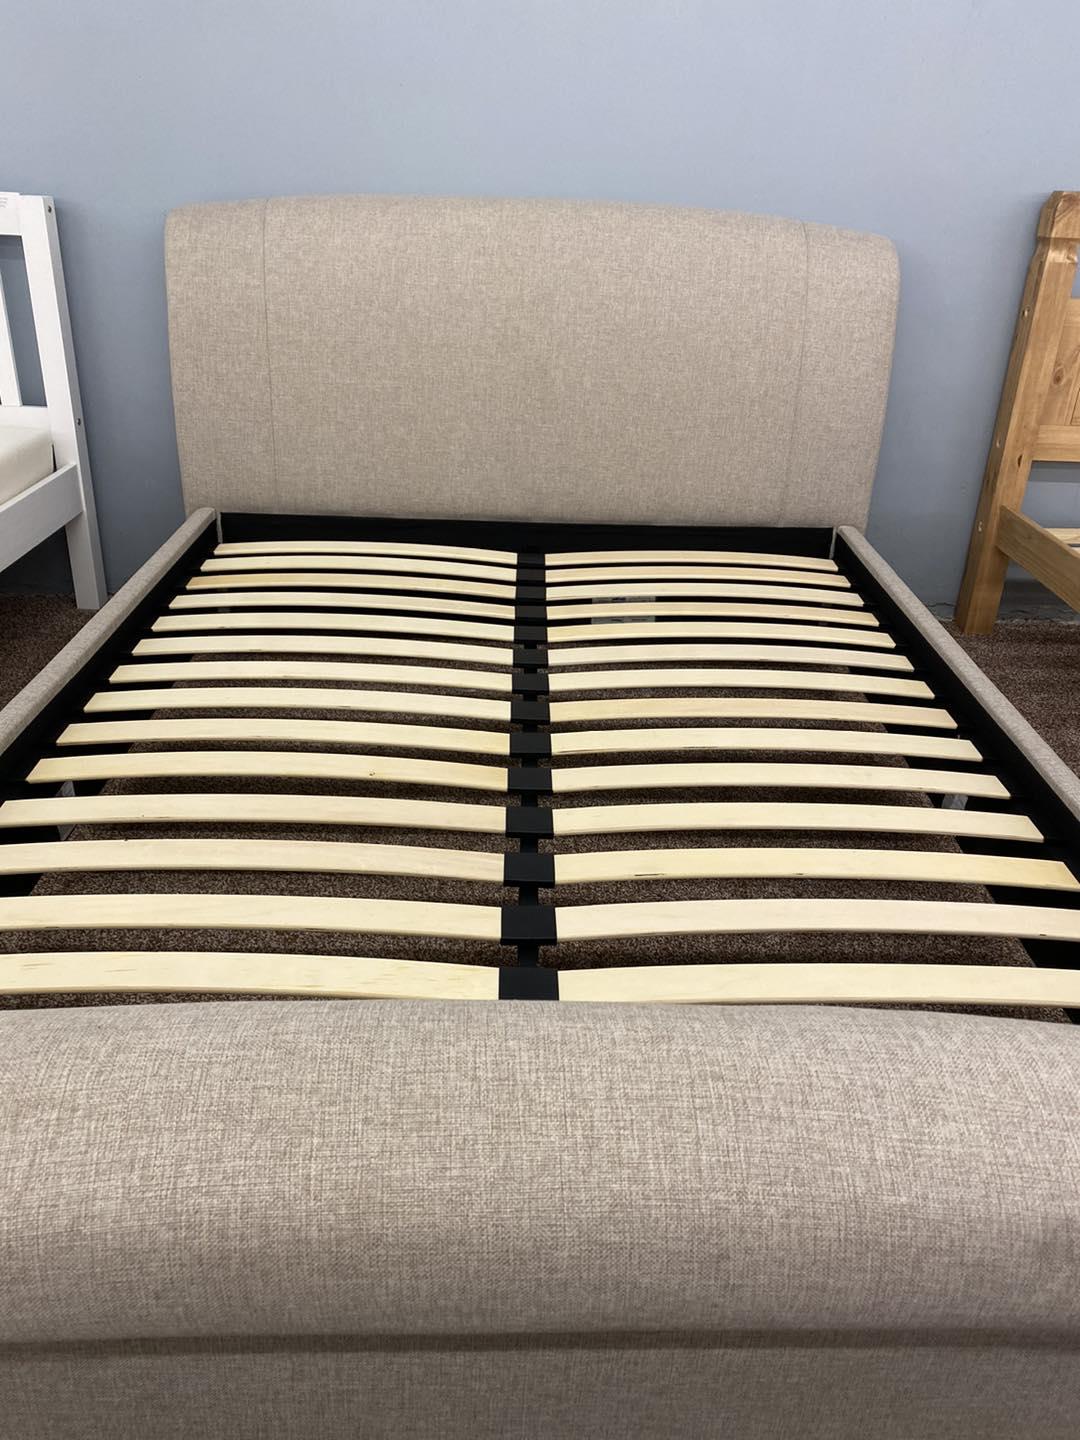 Buckingham Fabric King Size Sleigh Bed Frame